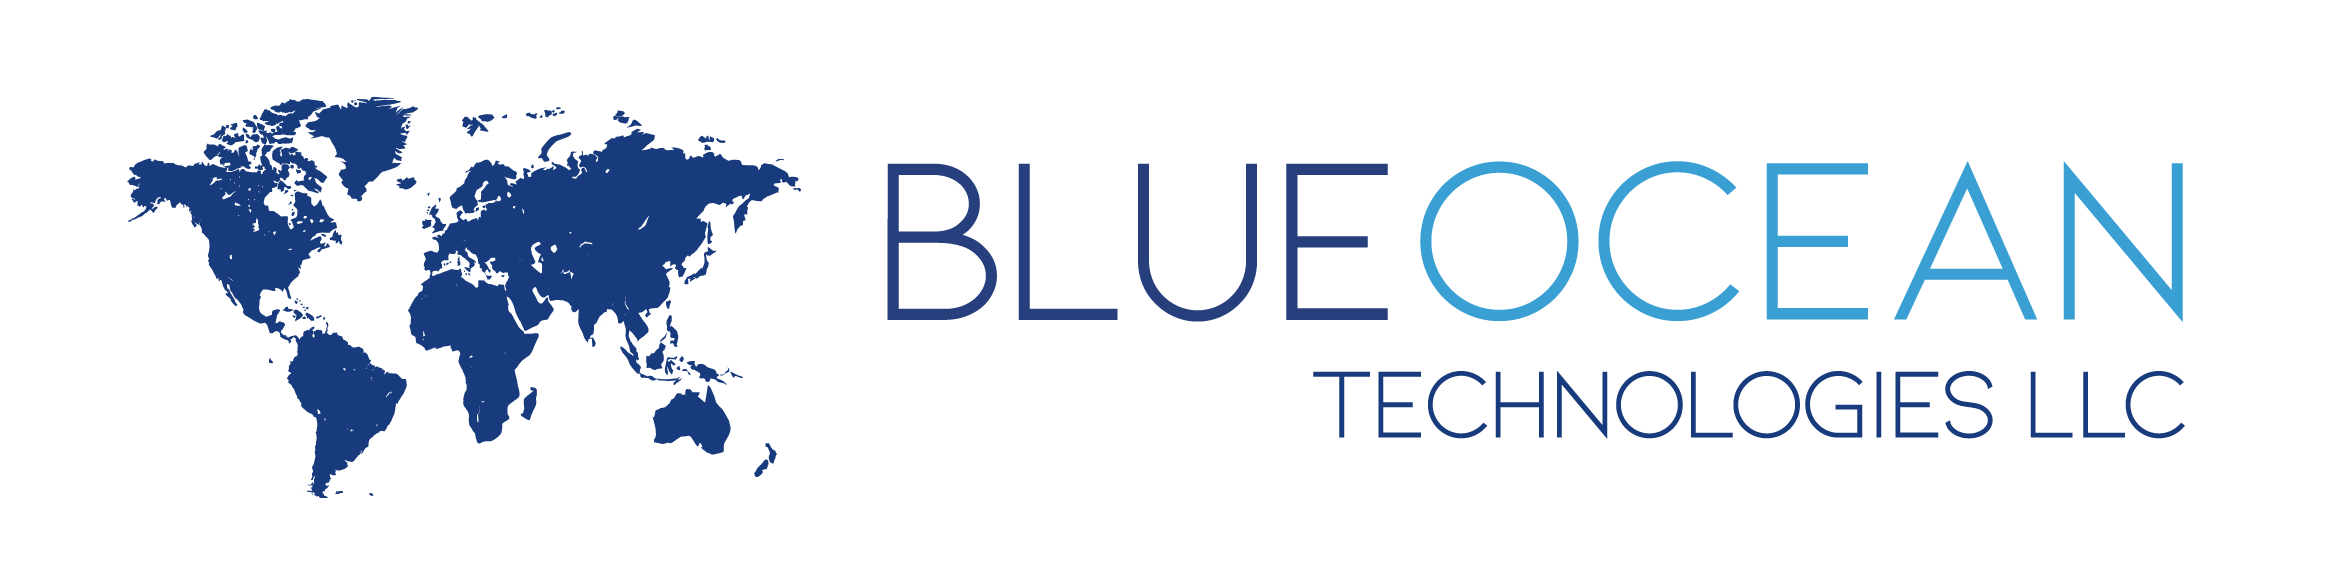 Blue Ocean Technologies LLC (Staging)